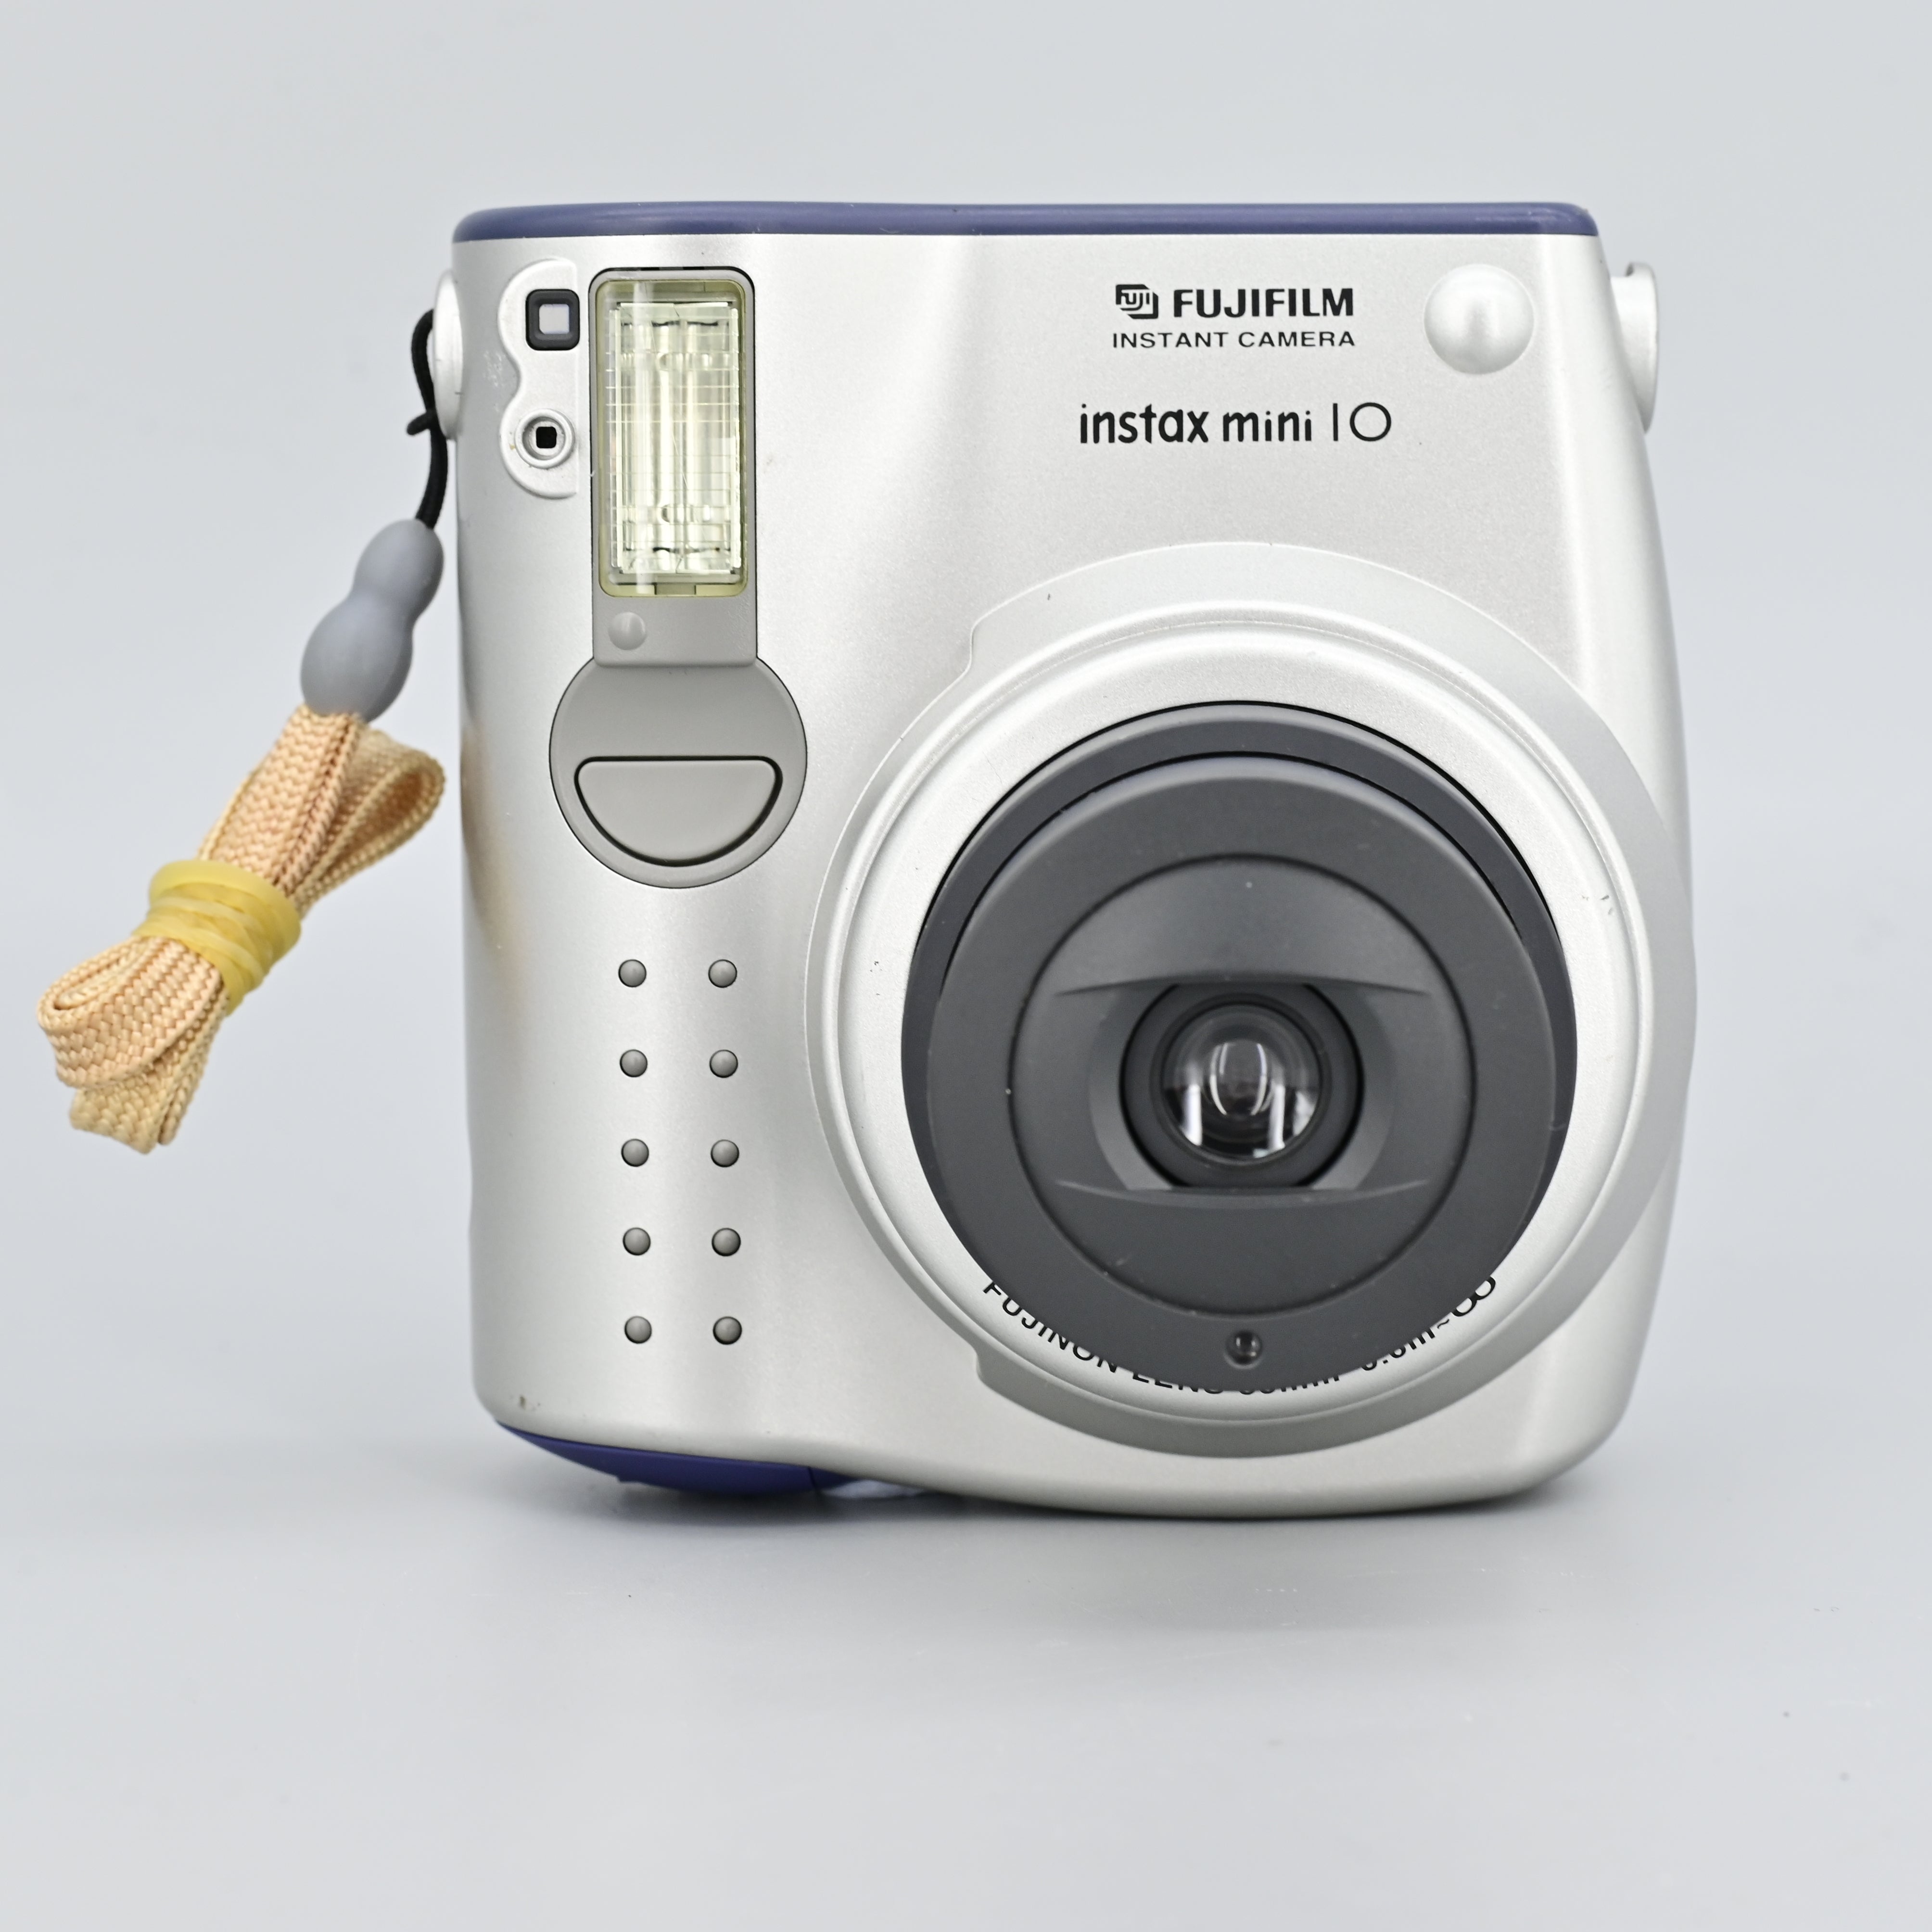 Dapper Uitsluiting saai Fujifilm Instax Mini 10 Instant Camera